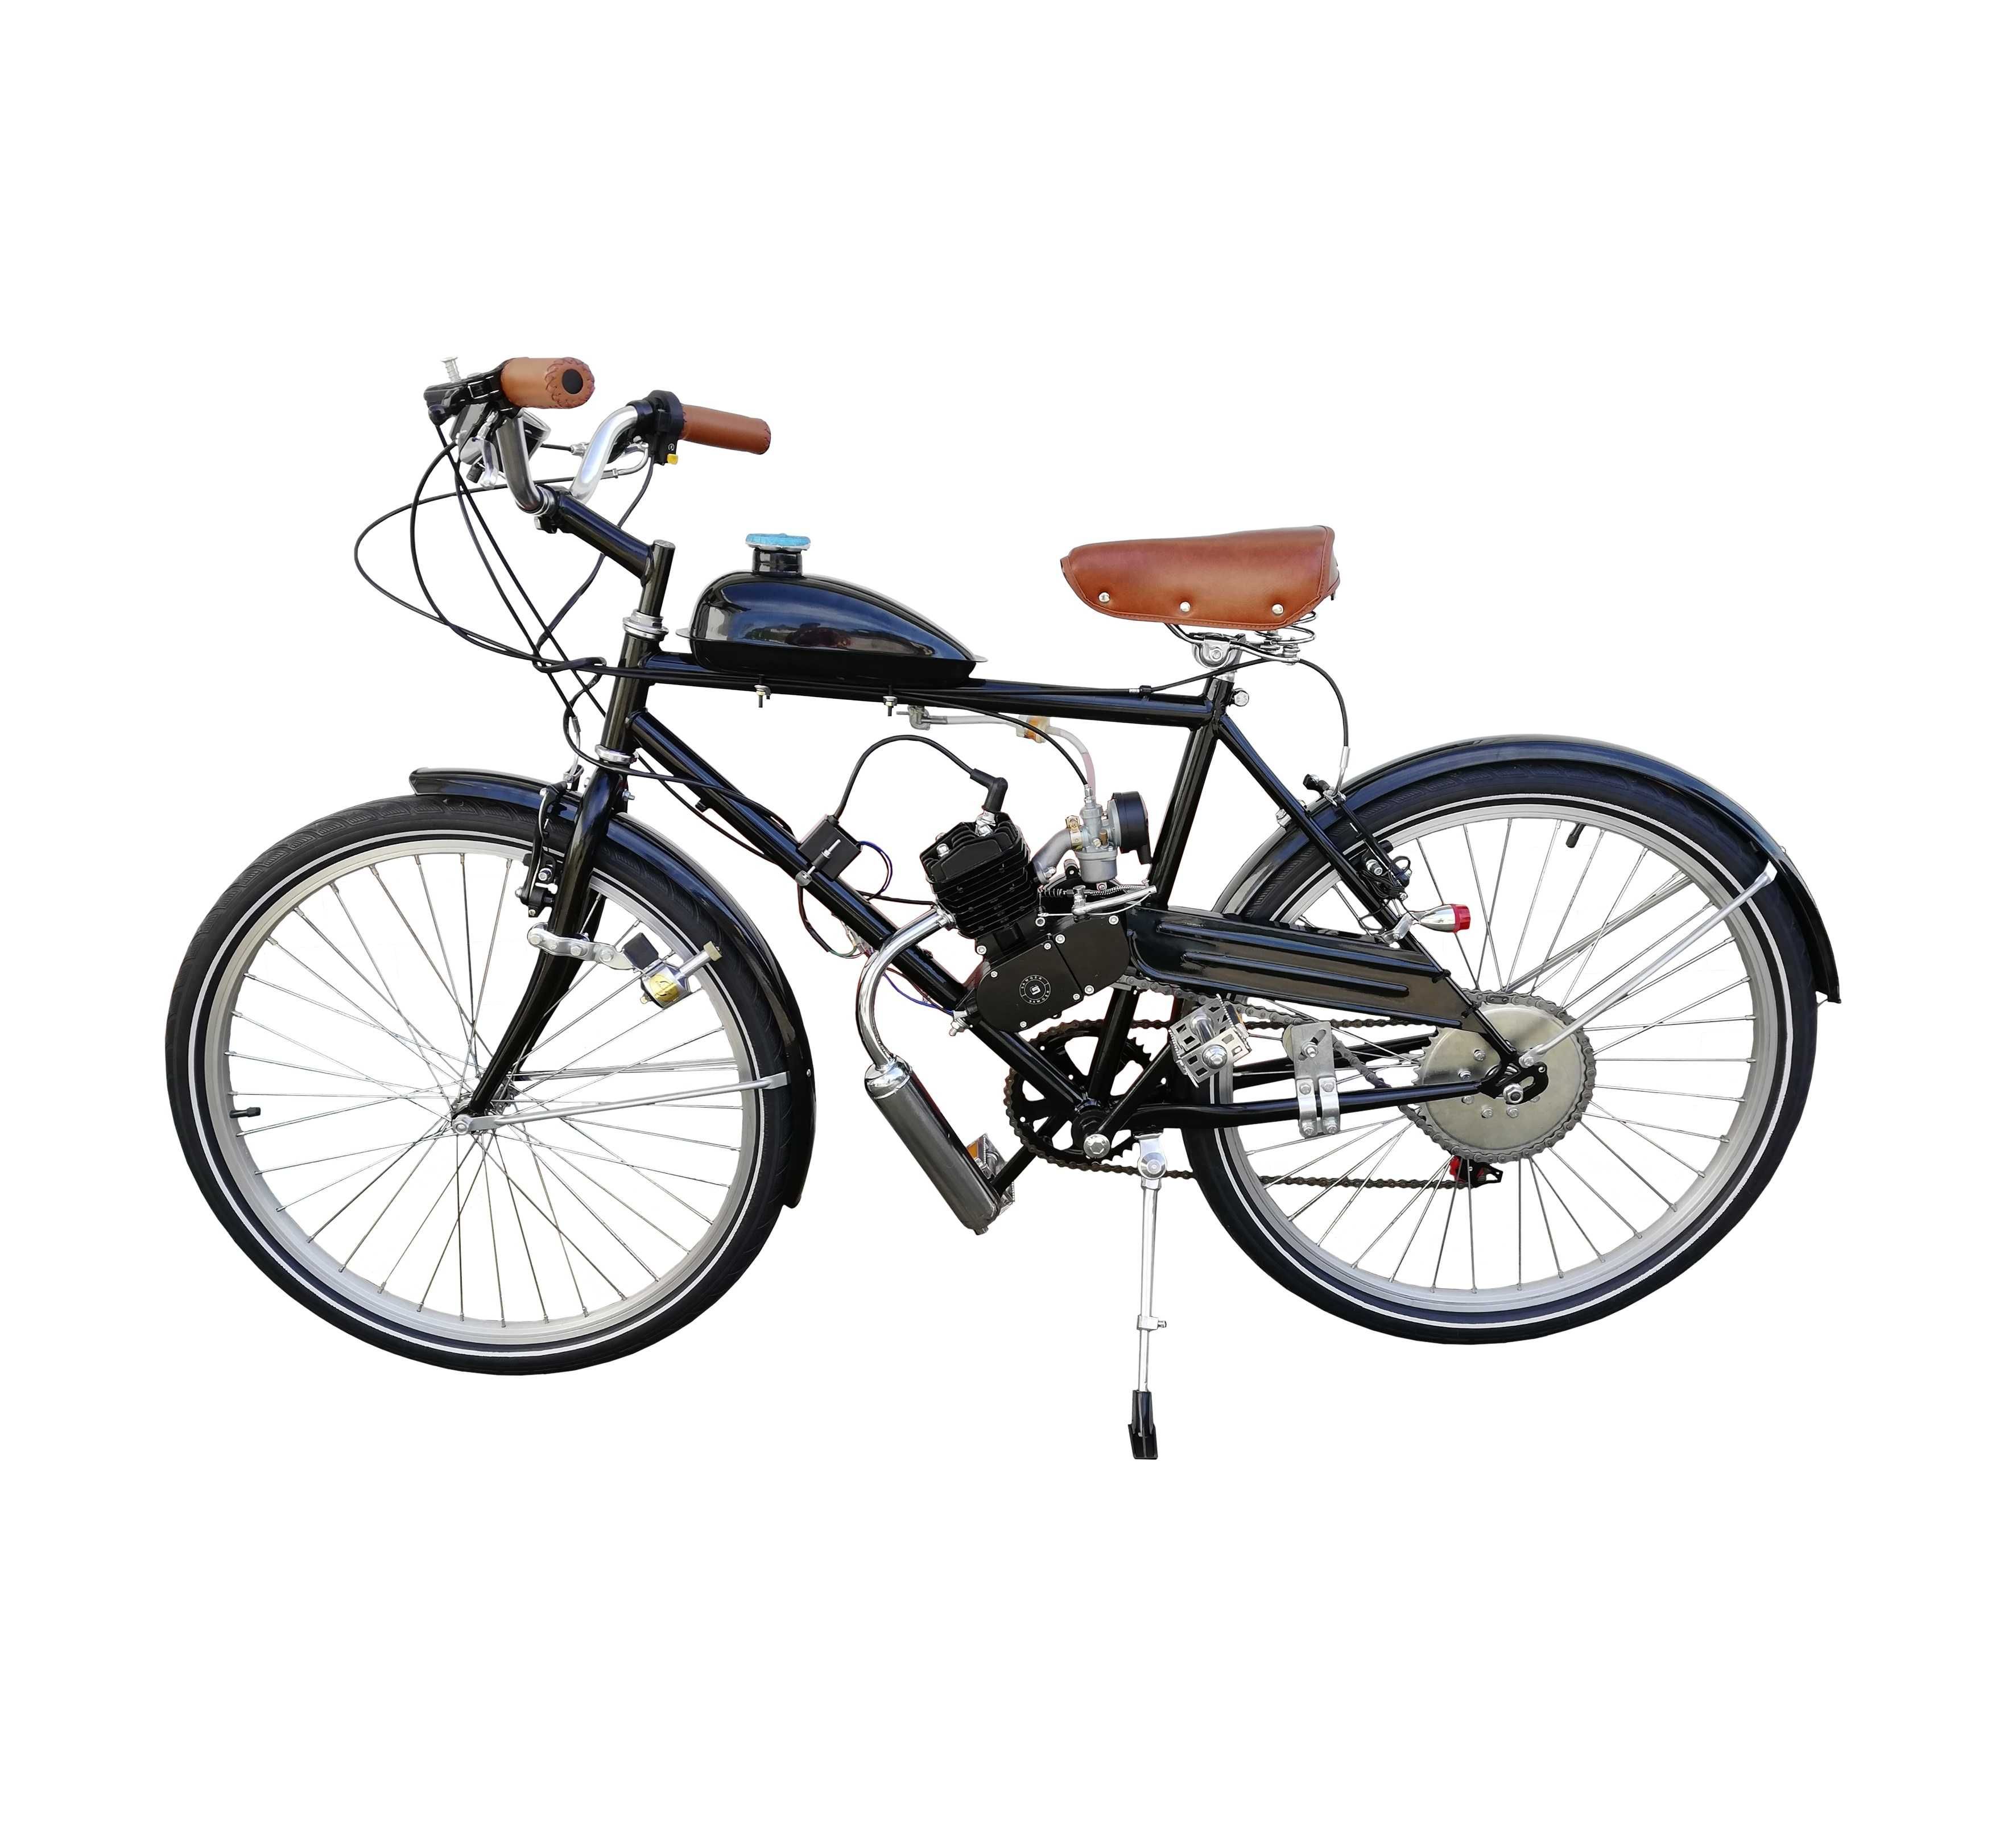 Kit de Motor Completo 80cc p/ Bicicleta